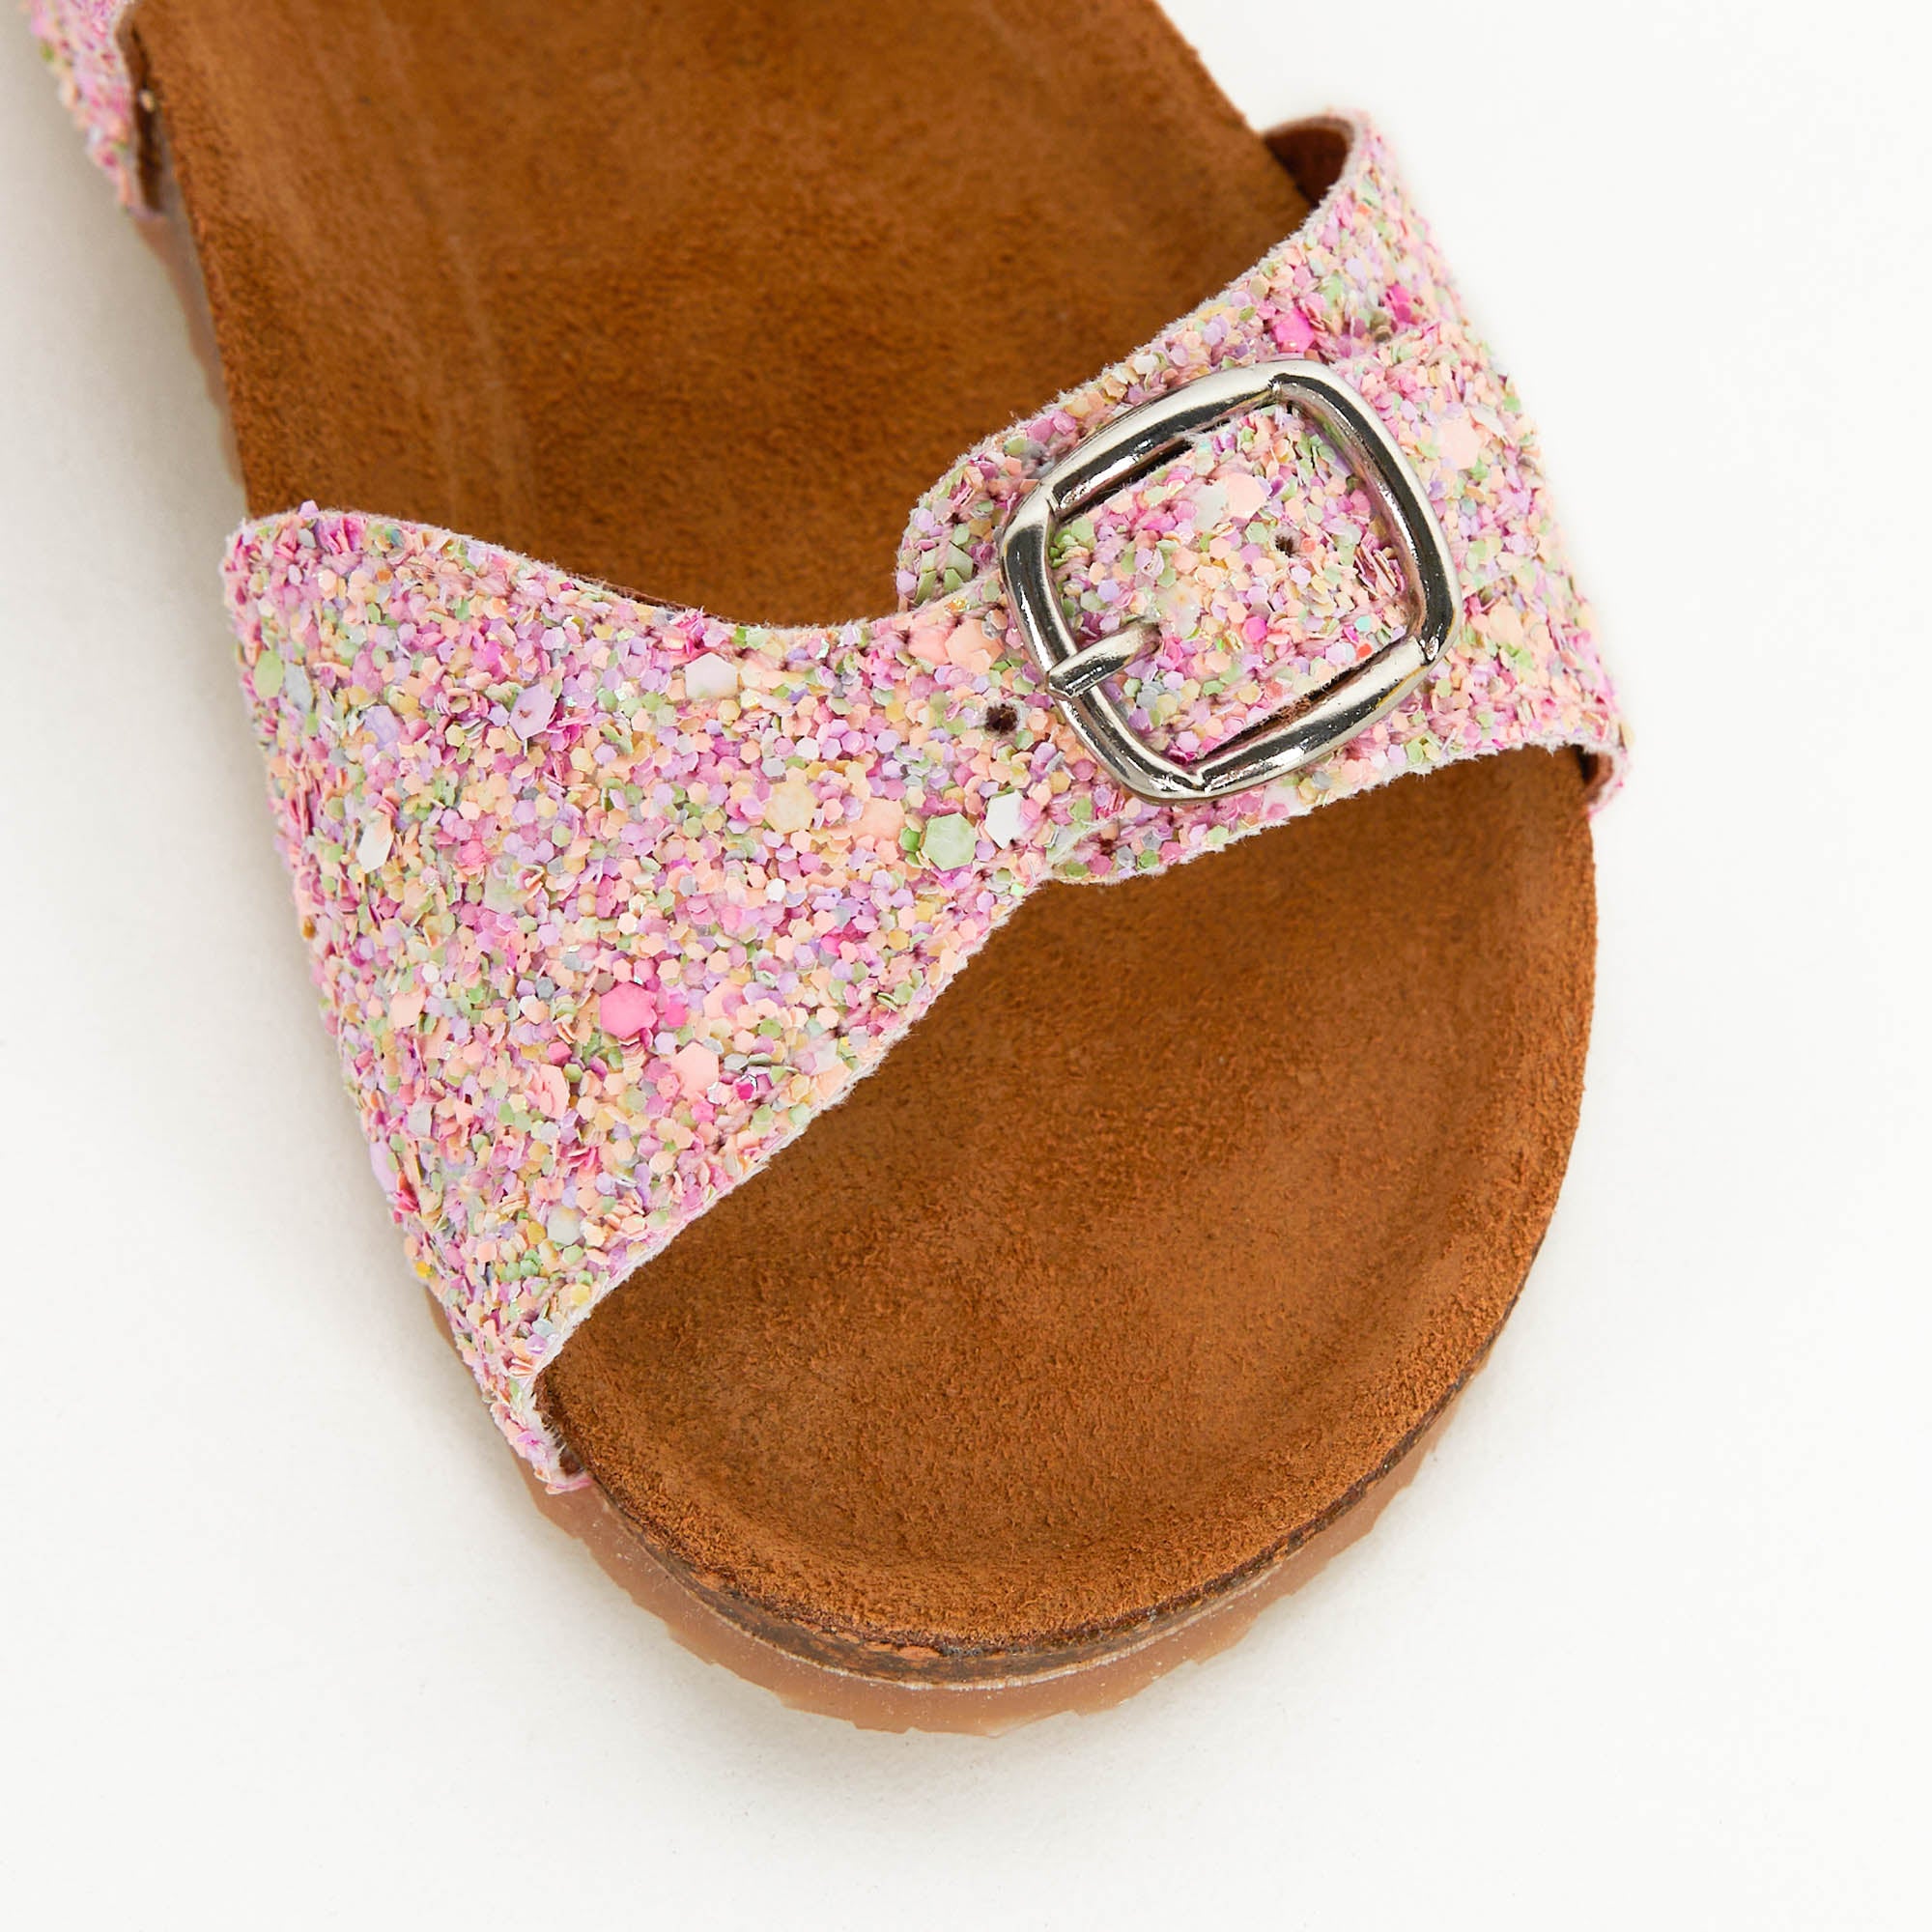 Girls Pink Glitter Sandals